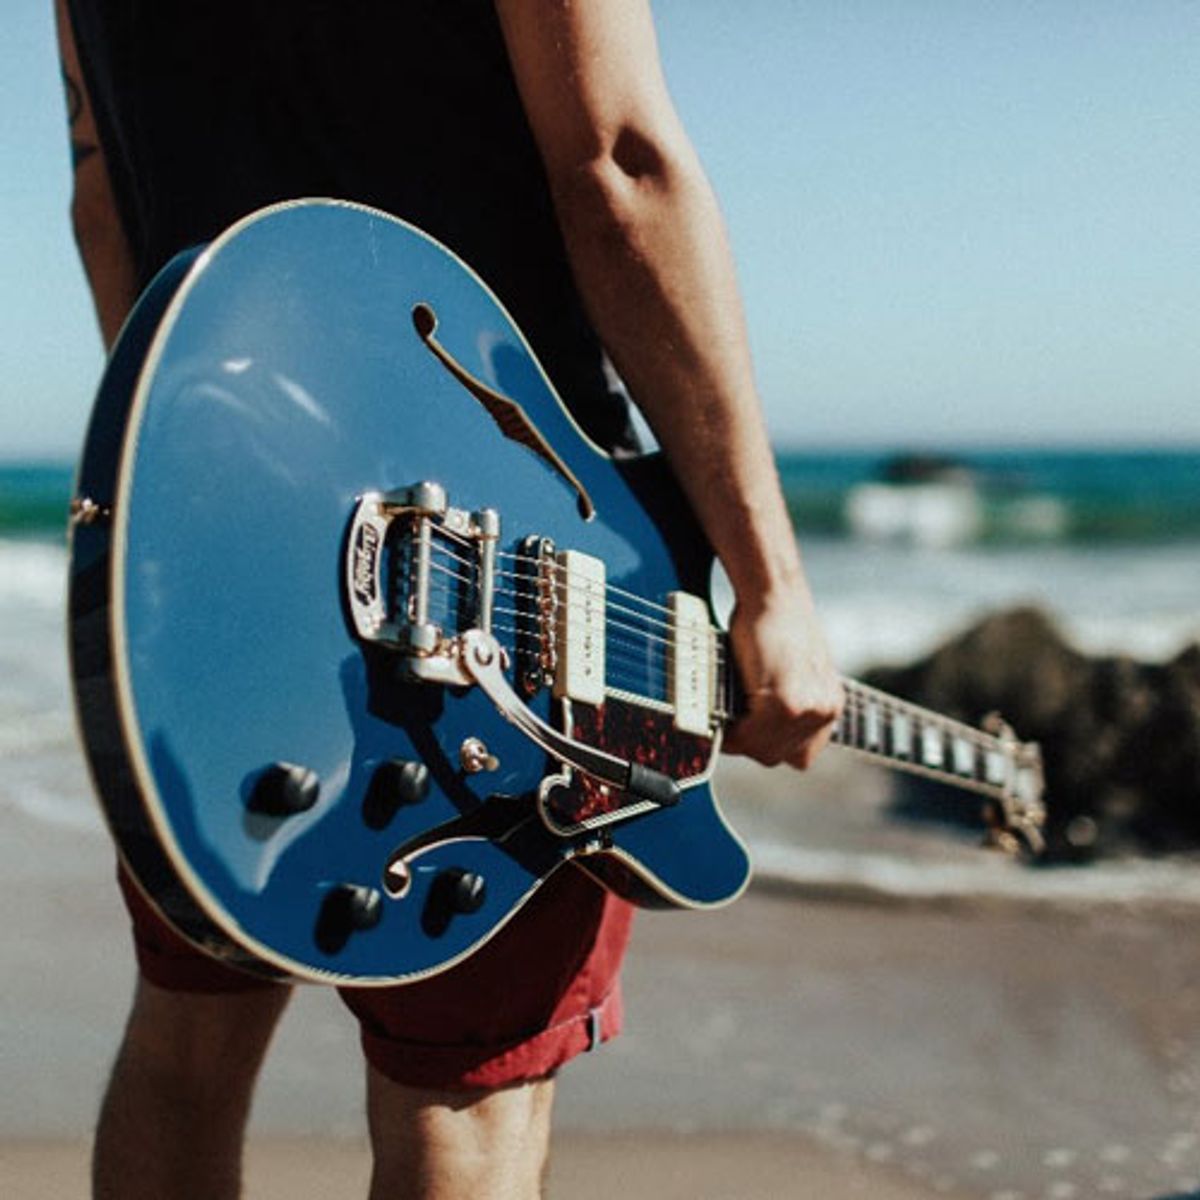 D’Angelico Guitars Debuts the Excel Shoreline